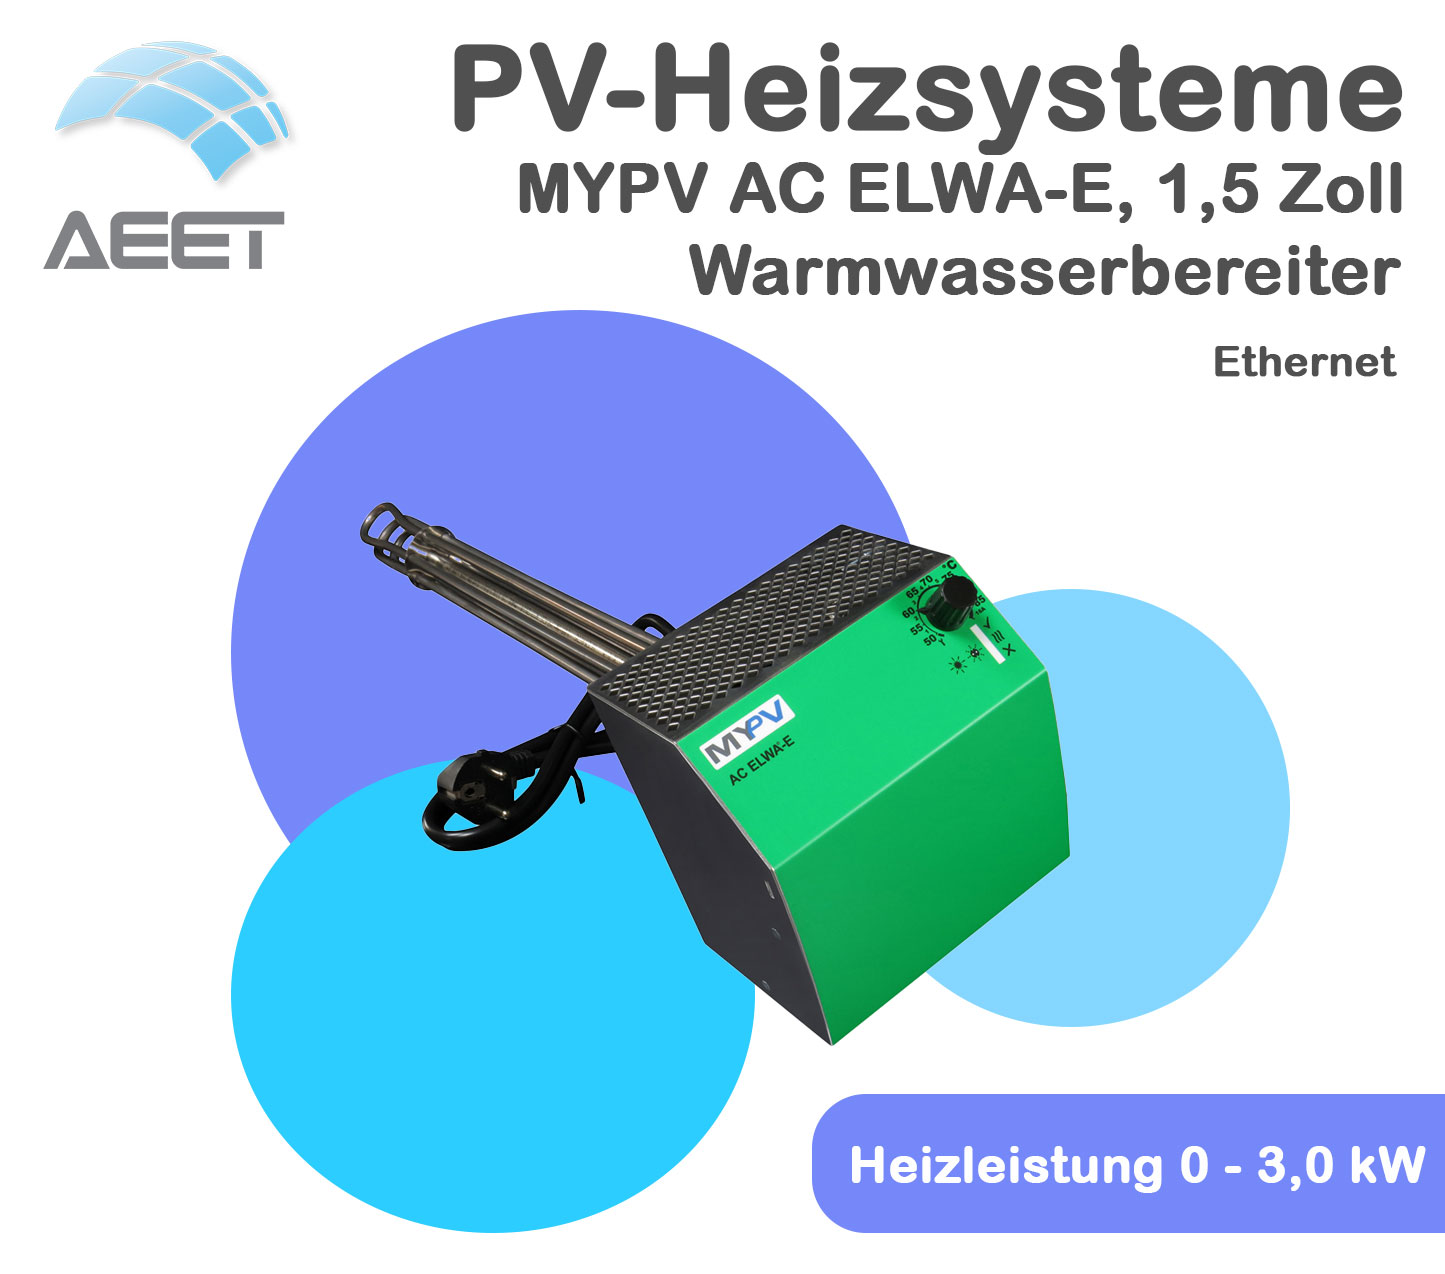 MYPV AC ELWA-E, 1,5 Zoll Warmwasserbereiter Ethernet